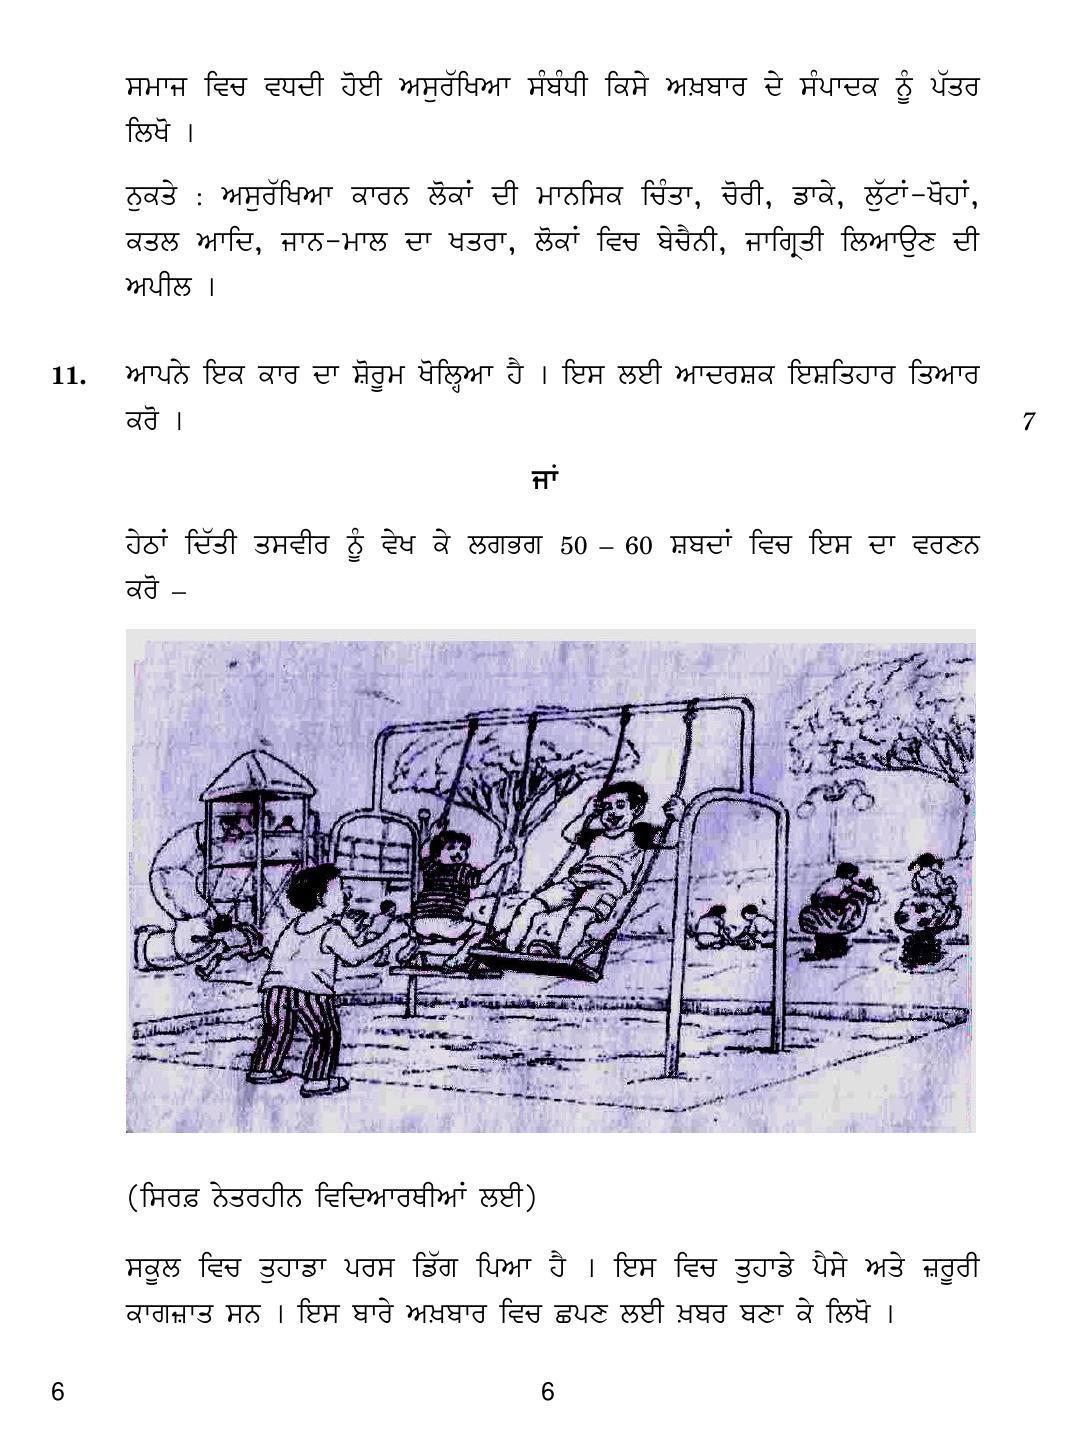 CBSE Class 10 6 Punjabi 2019 Compartment Question Paper - Page 6